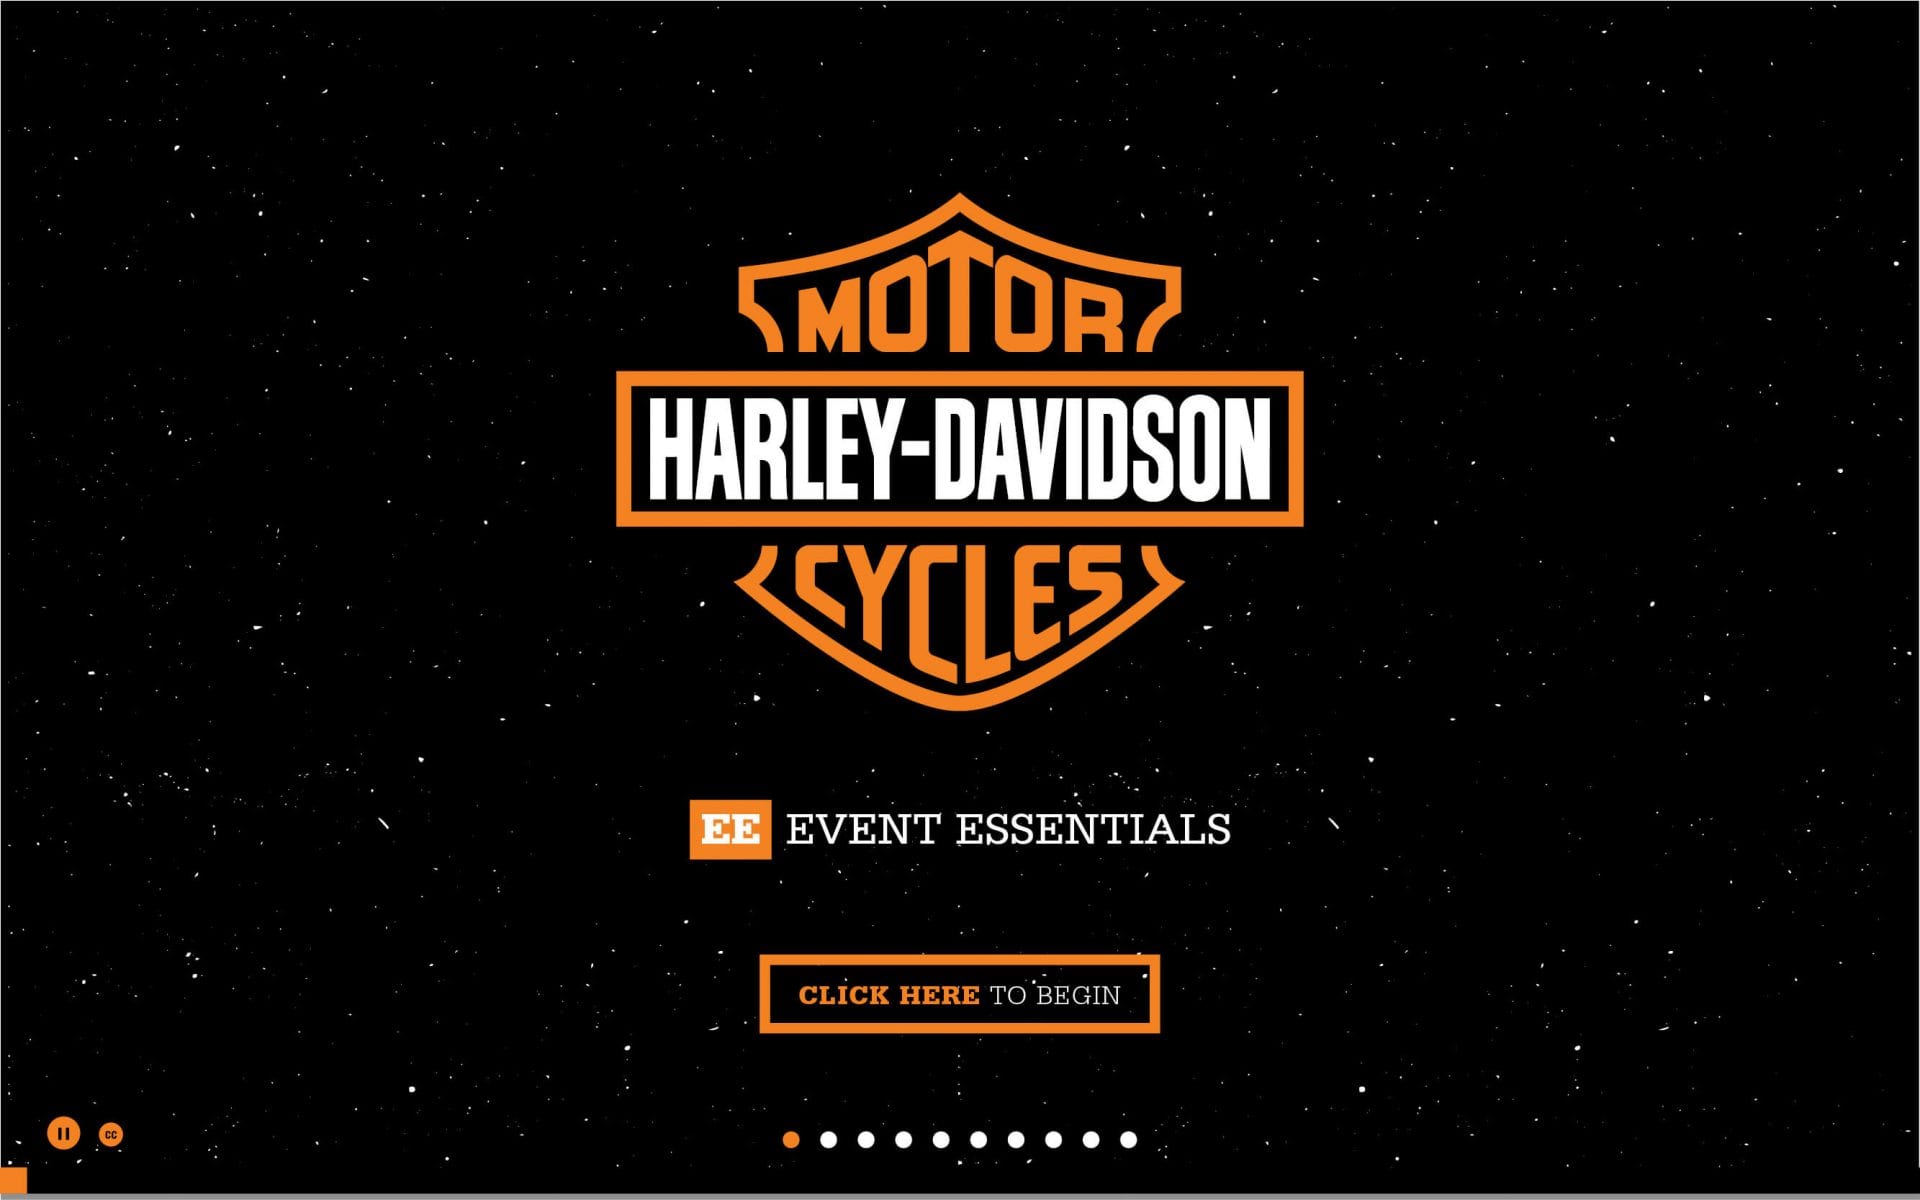 Harley Davidson Motor Cycles_Mechanics_eModule-Intro